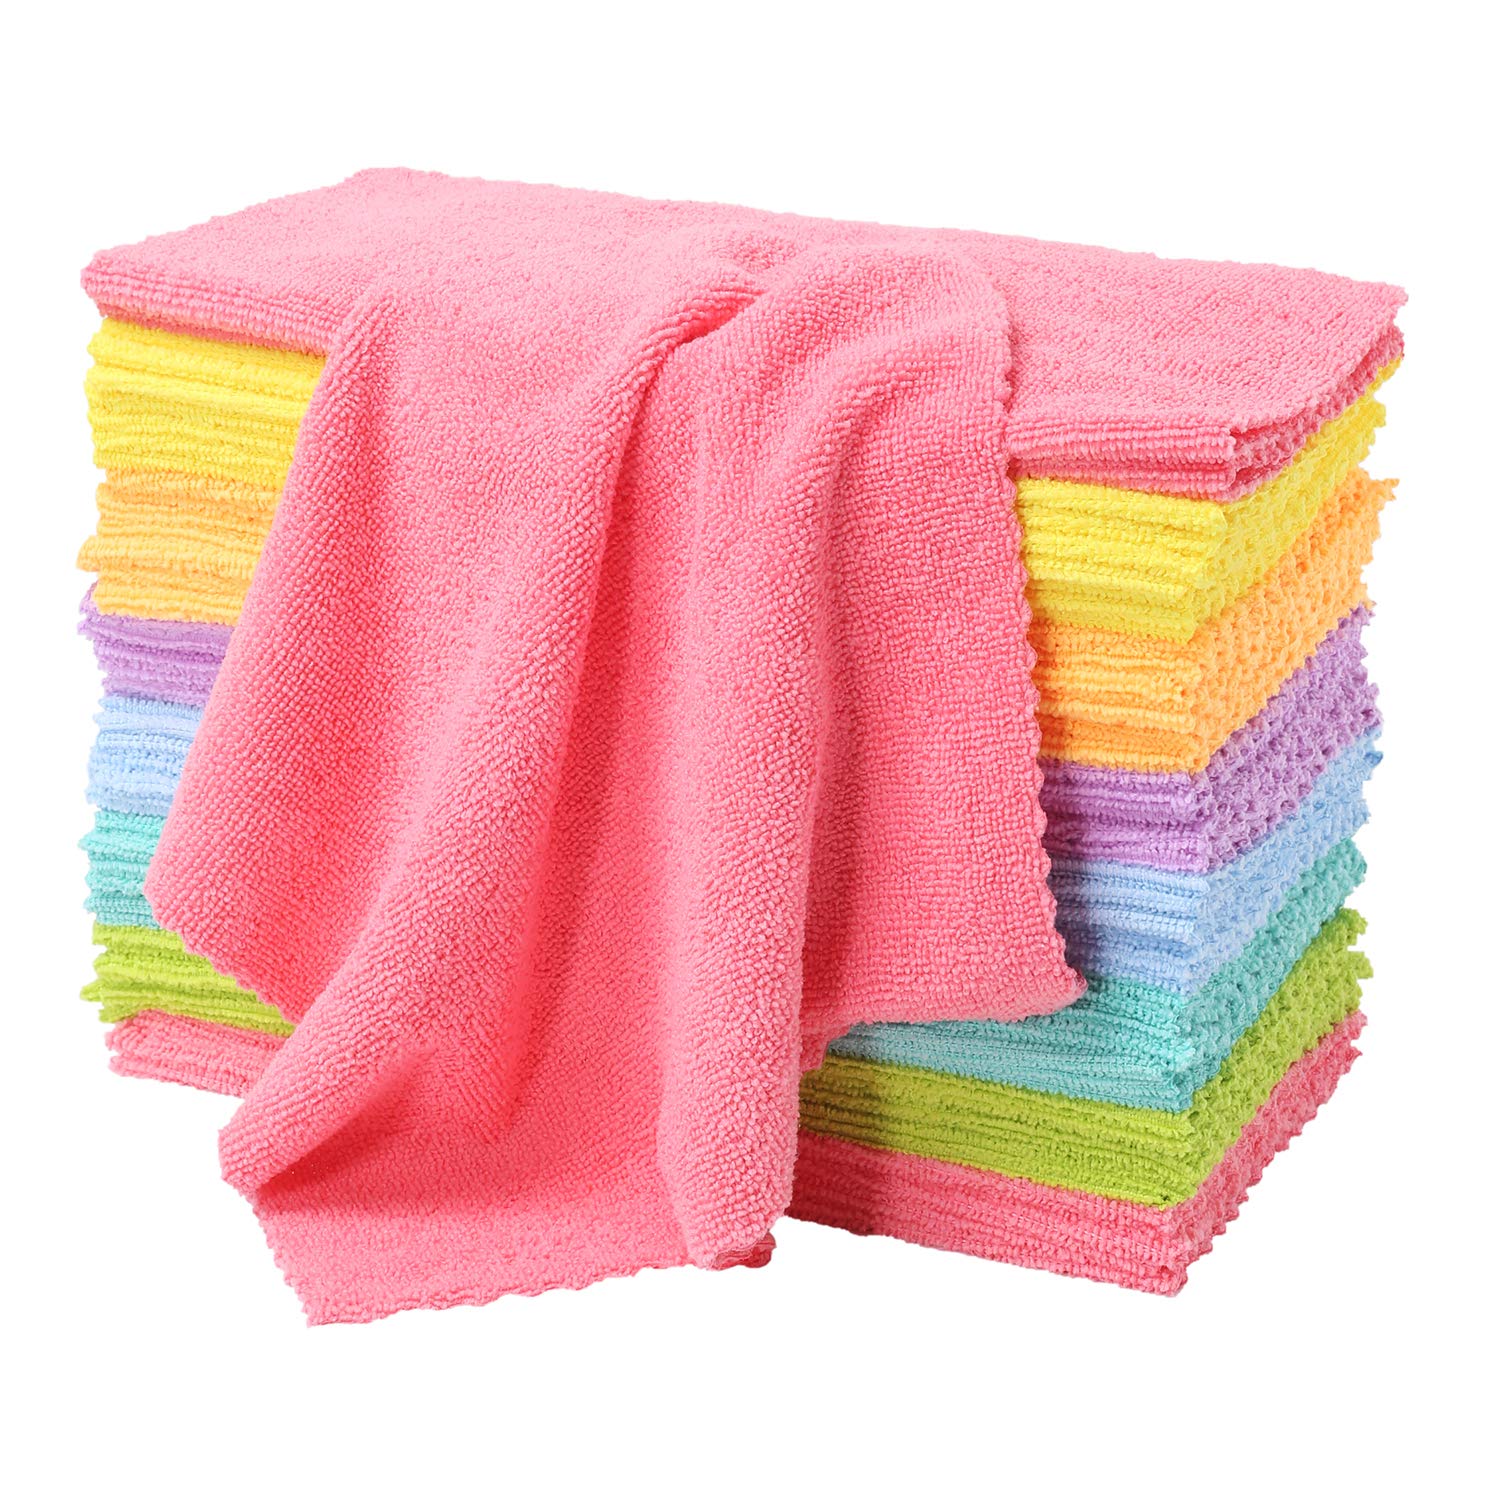 Professional Knowledge Of Microfiber Towels